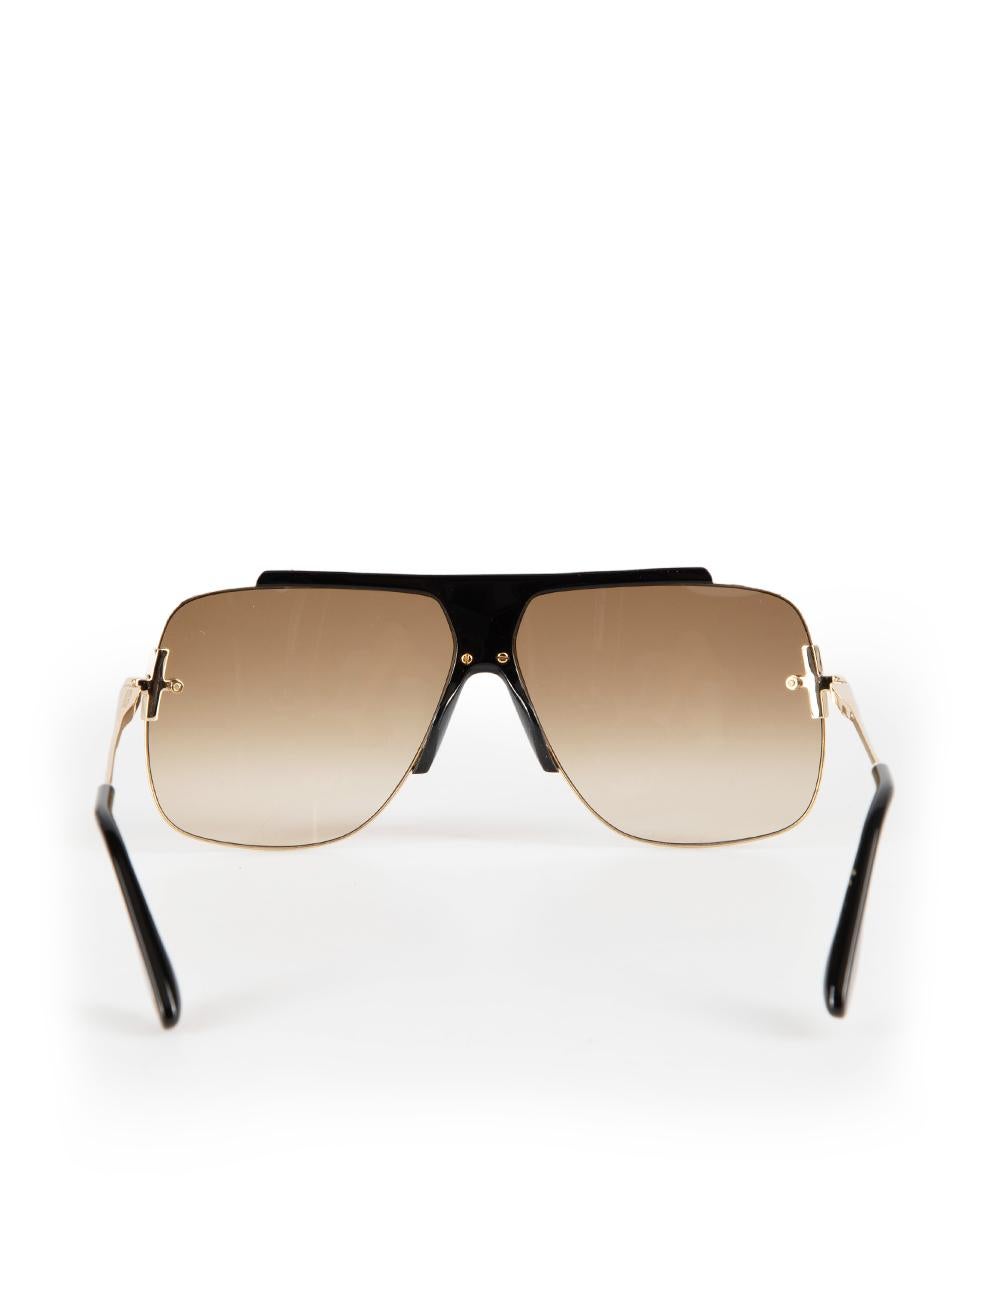 Women's Victoria Beckham Brown Gradient Navigator Sunglasses For Sale